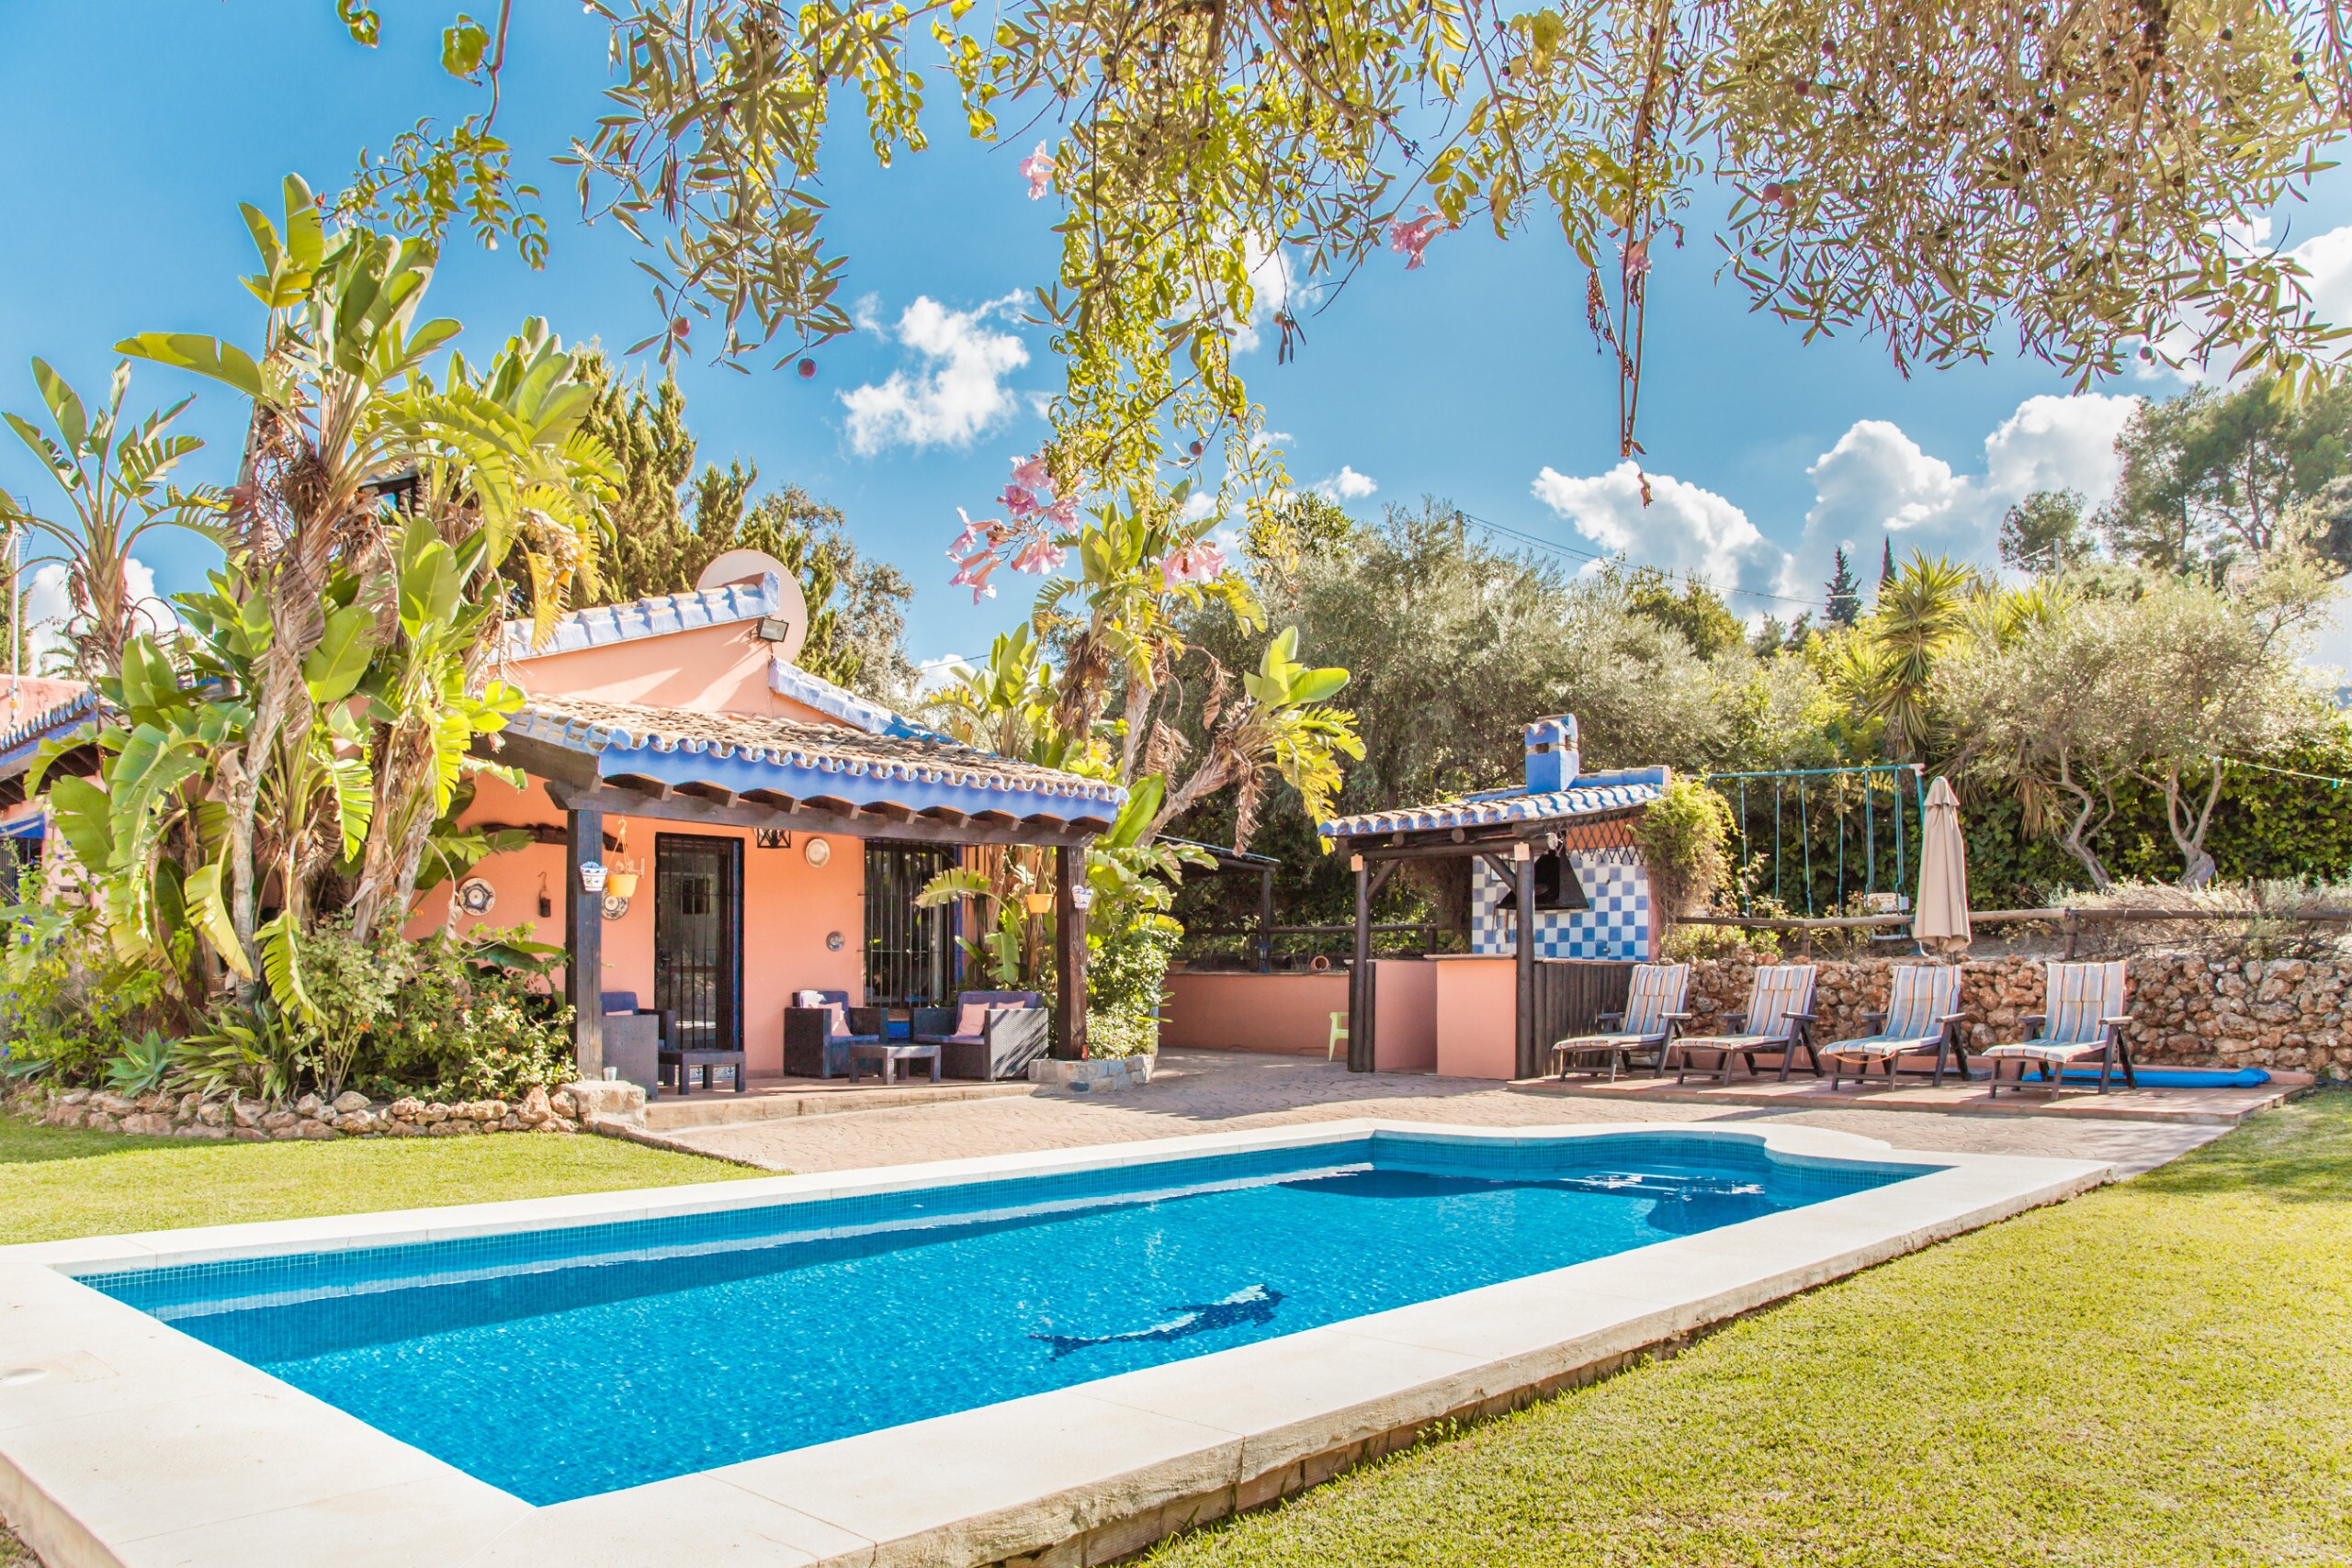 Enjoy the private pool of this estate in Alhaurín de la Torre